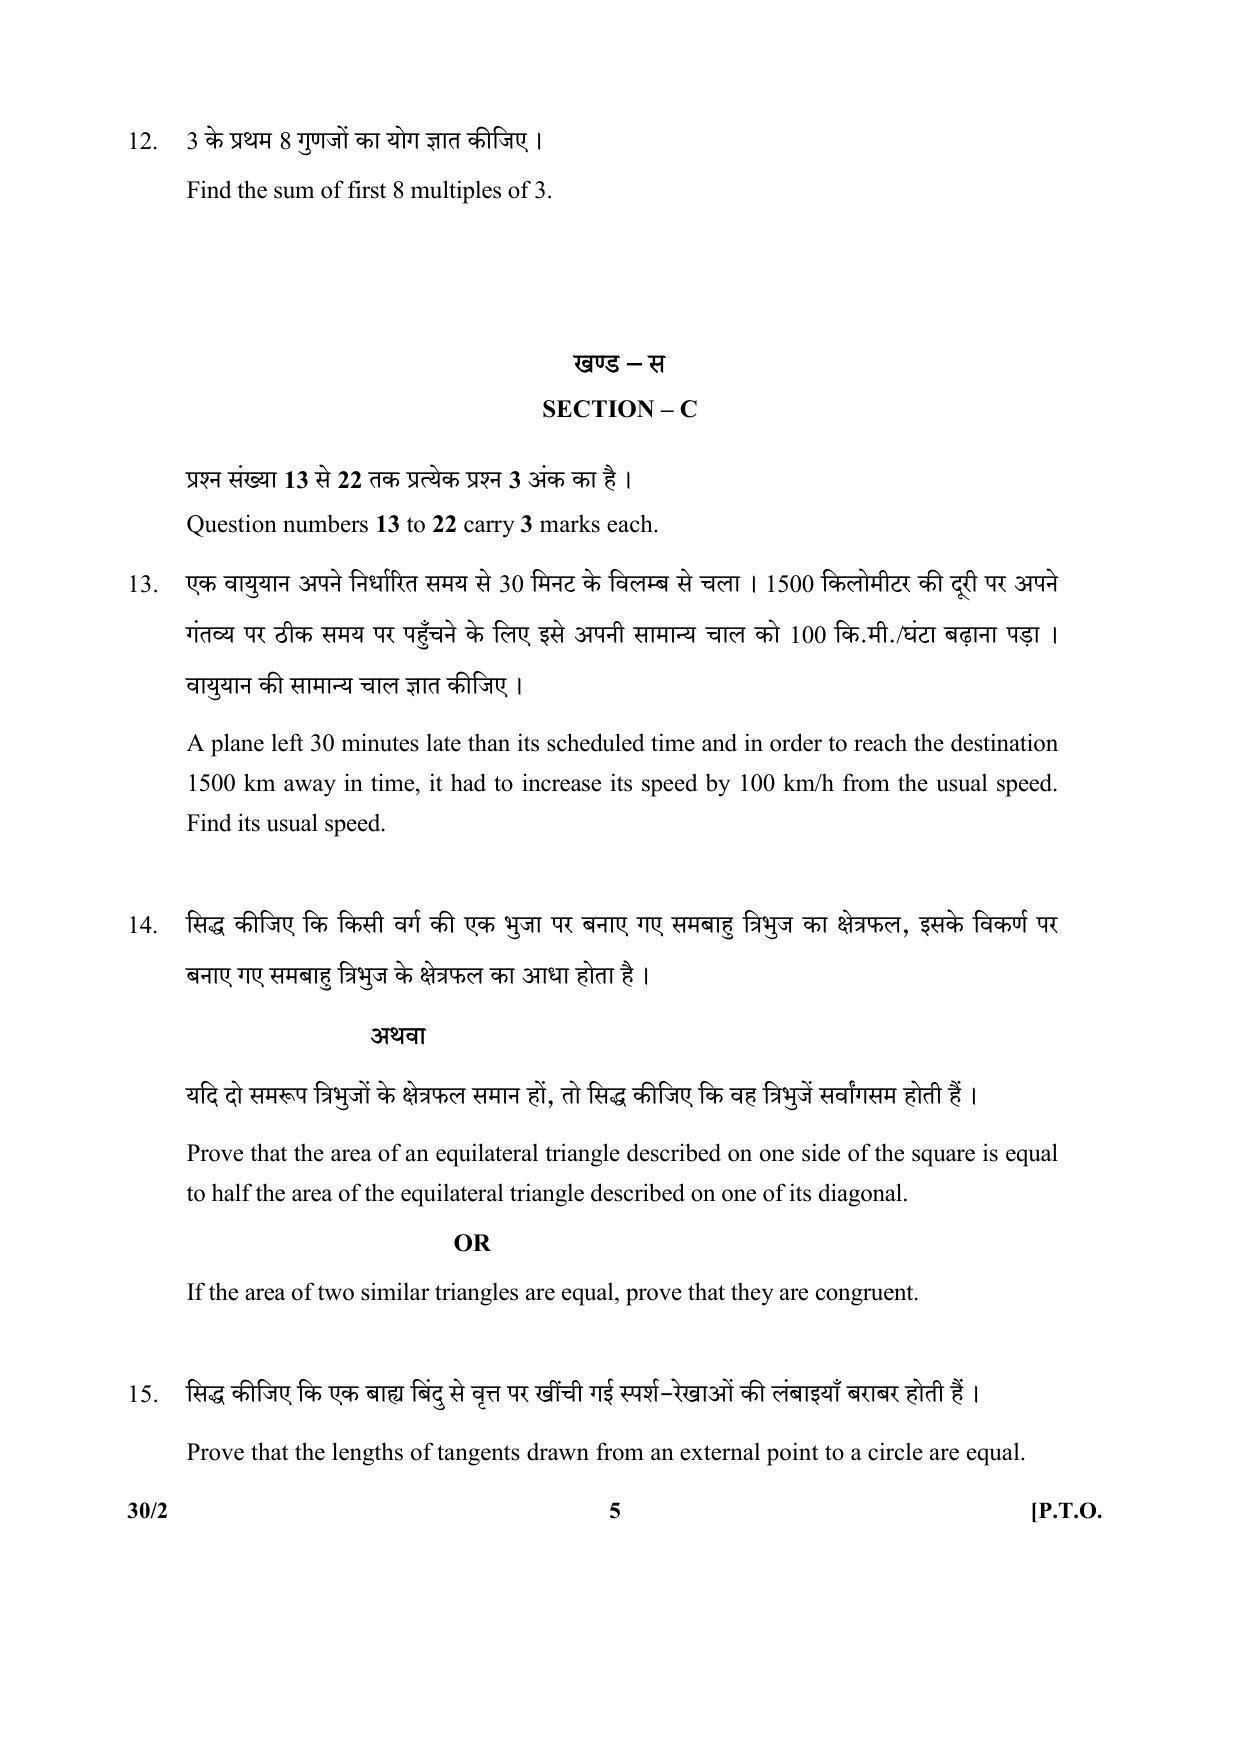 CBSE Class 10 30-2 SET-2 (Mathematics) 2018 Question Paper - Page 5